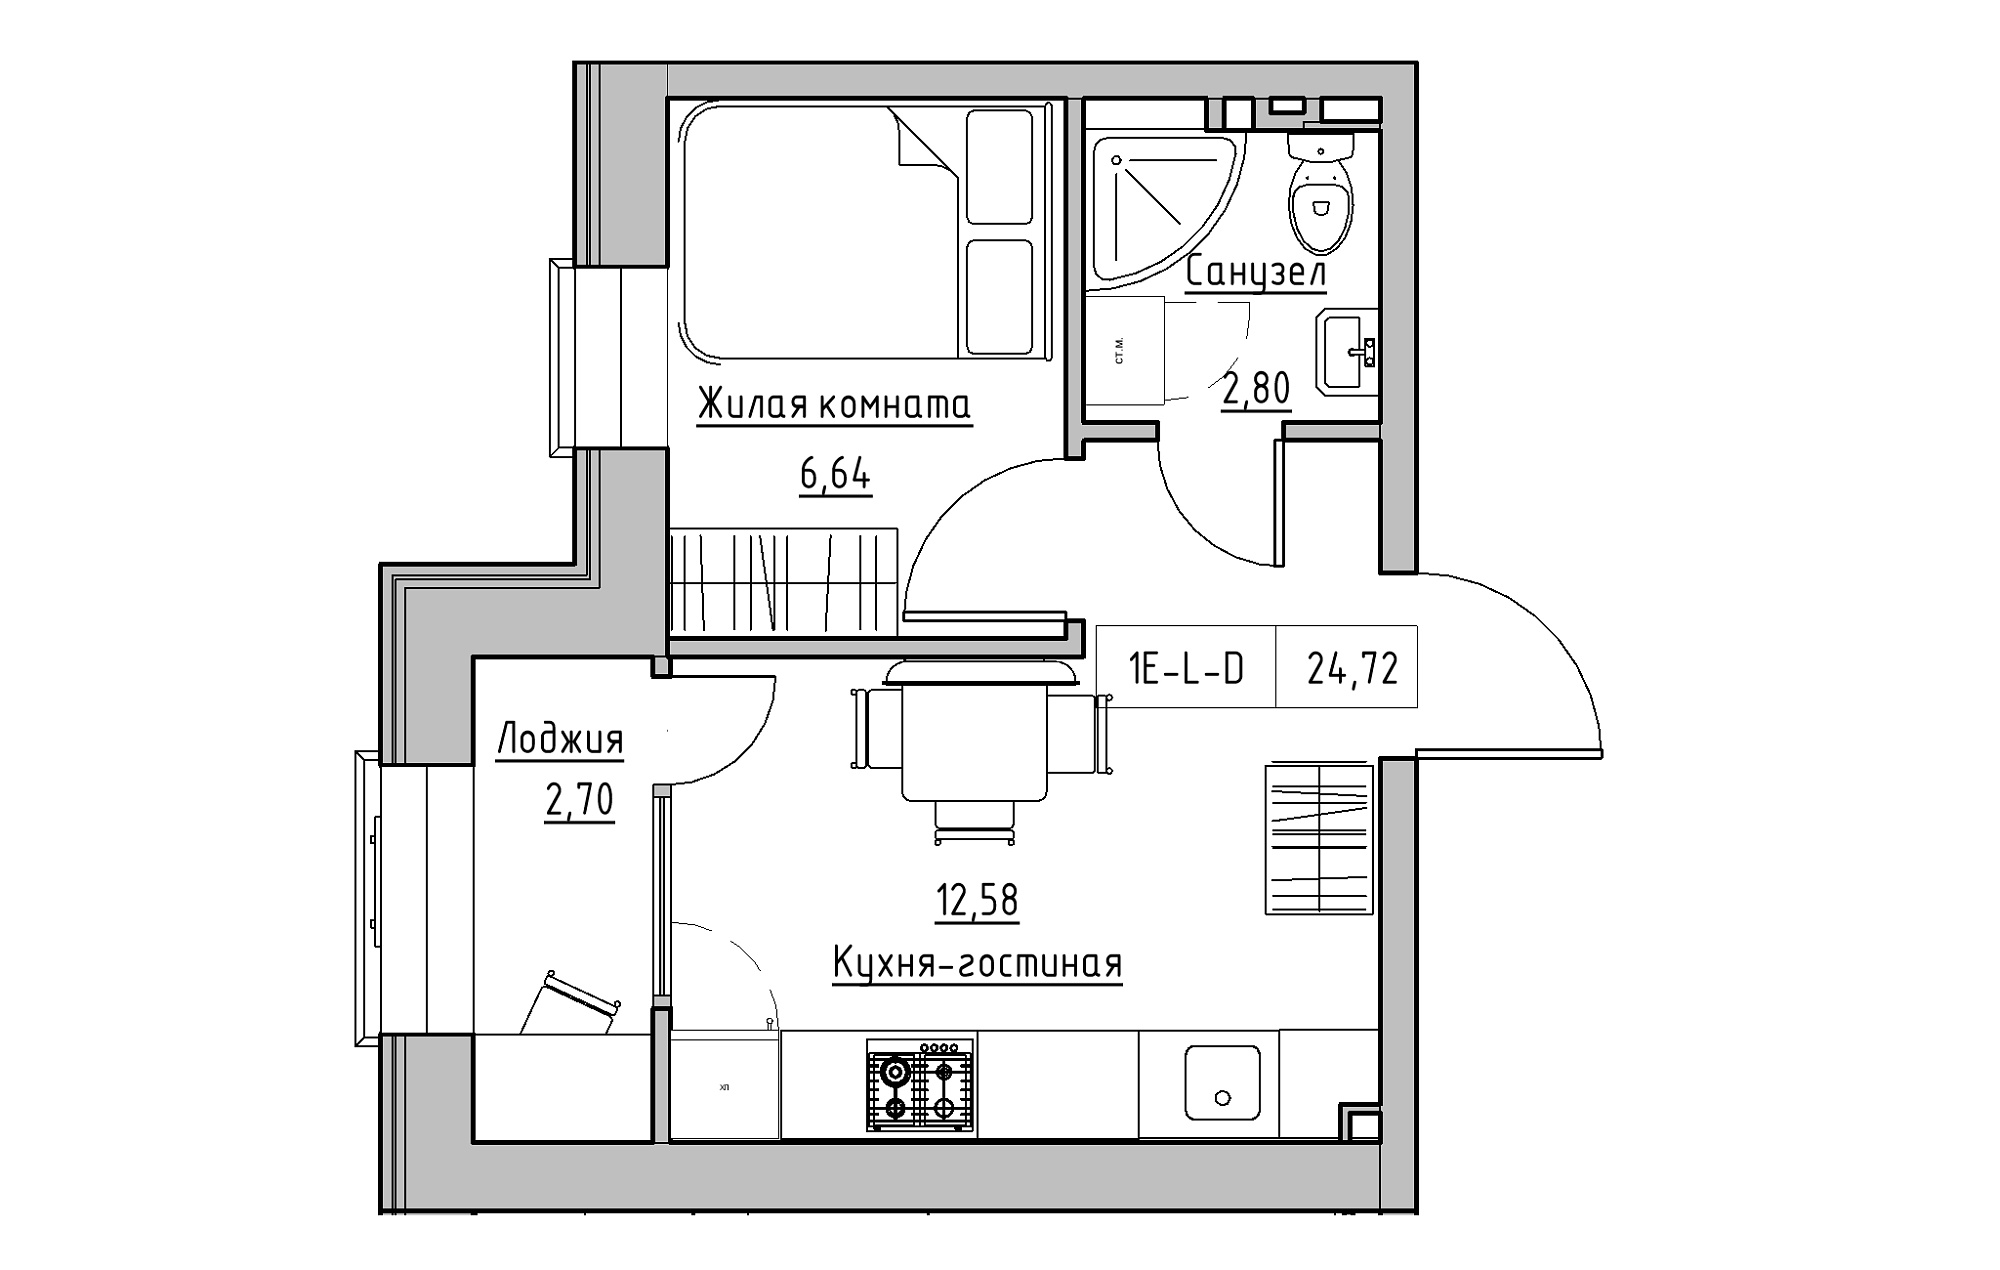 Planning 1-rm flats area 24.72m2, KS-018-03/0013.